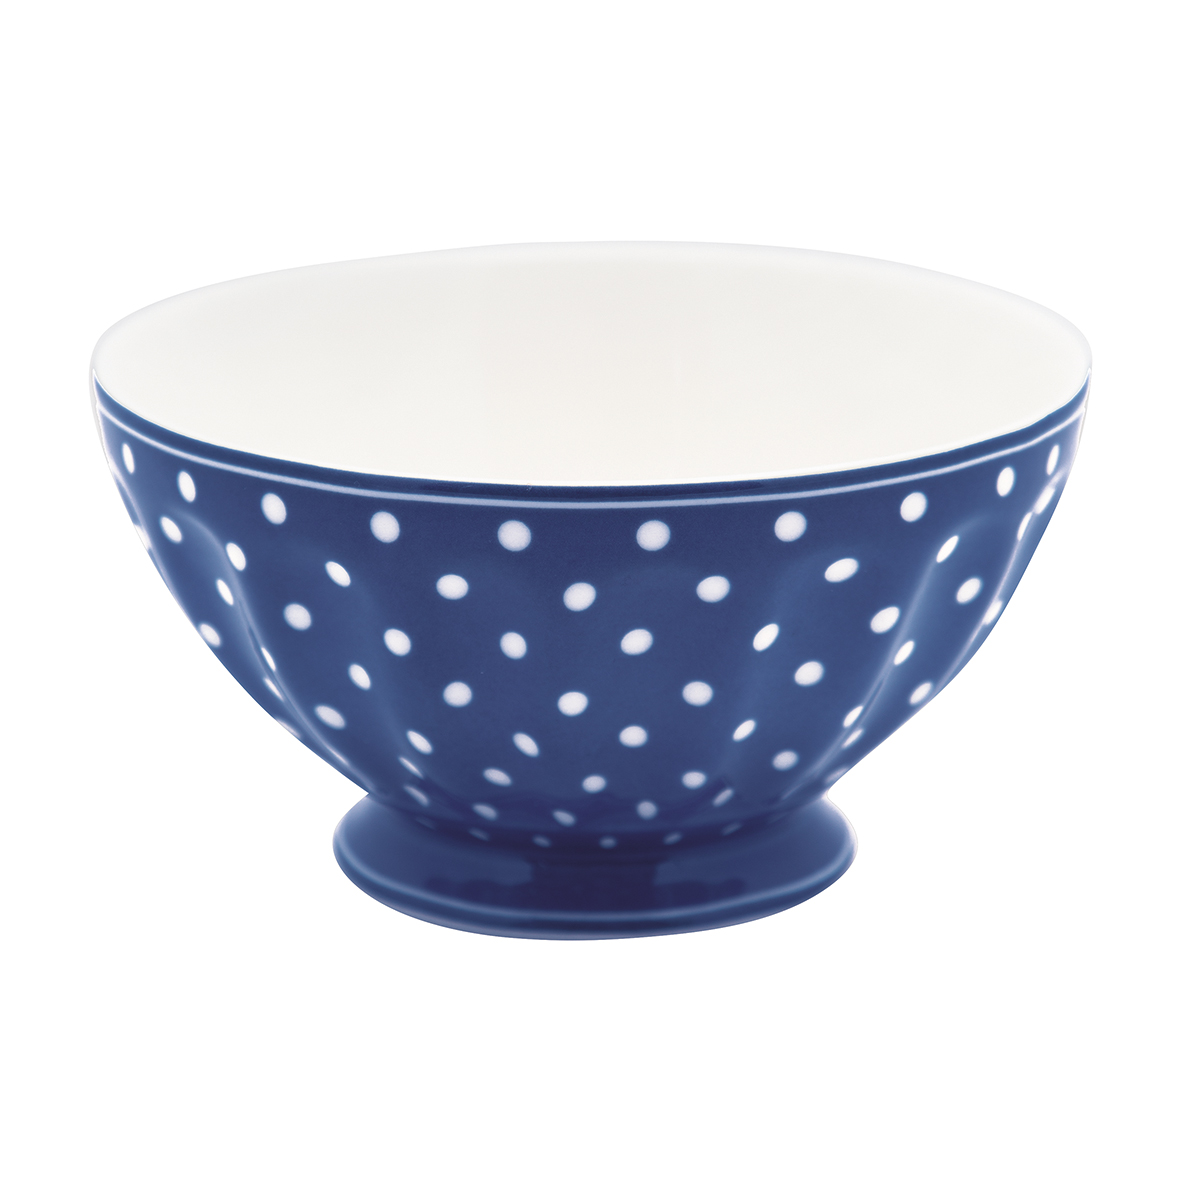 Greengate Schüssel Spot blue French bowl xlarge